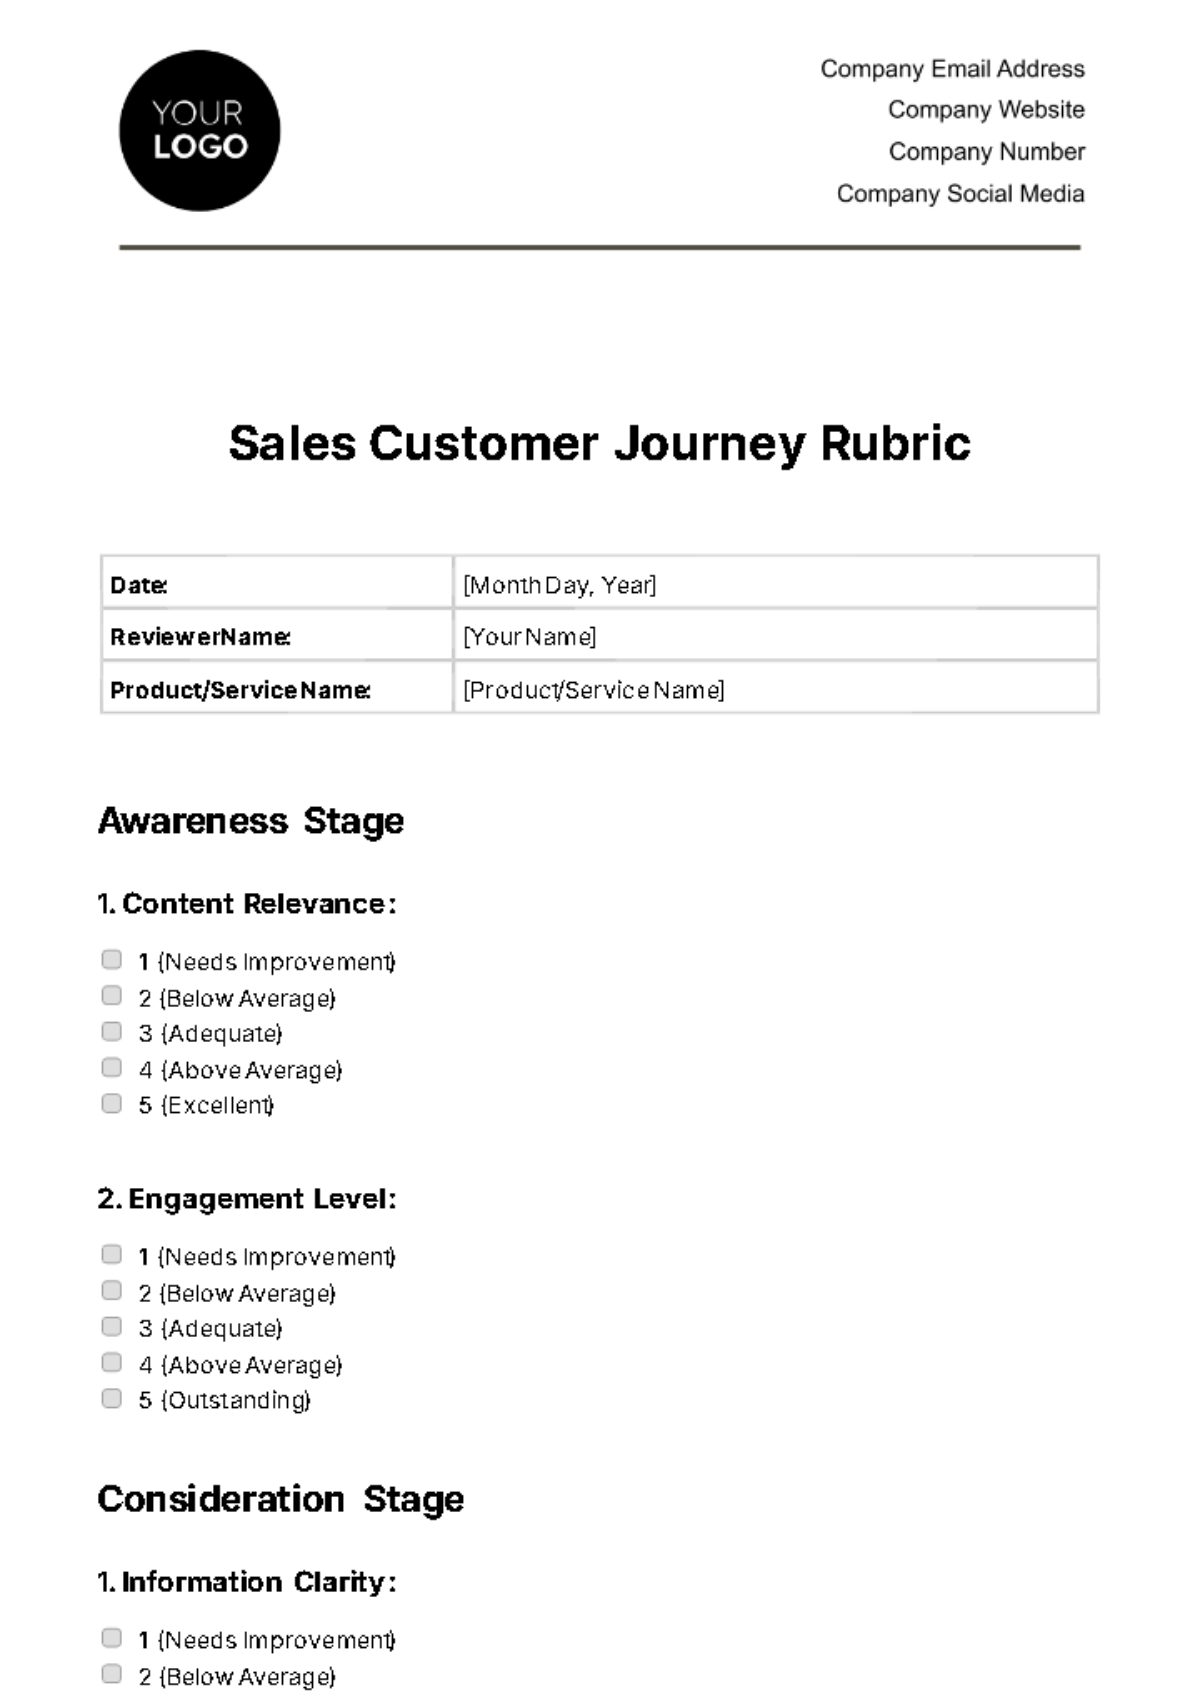 Sales Customer Journey Rubric Template